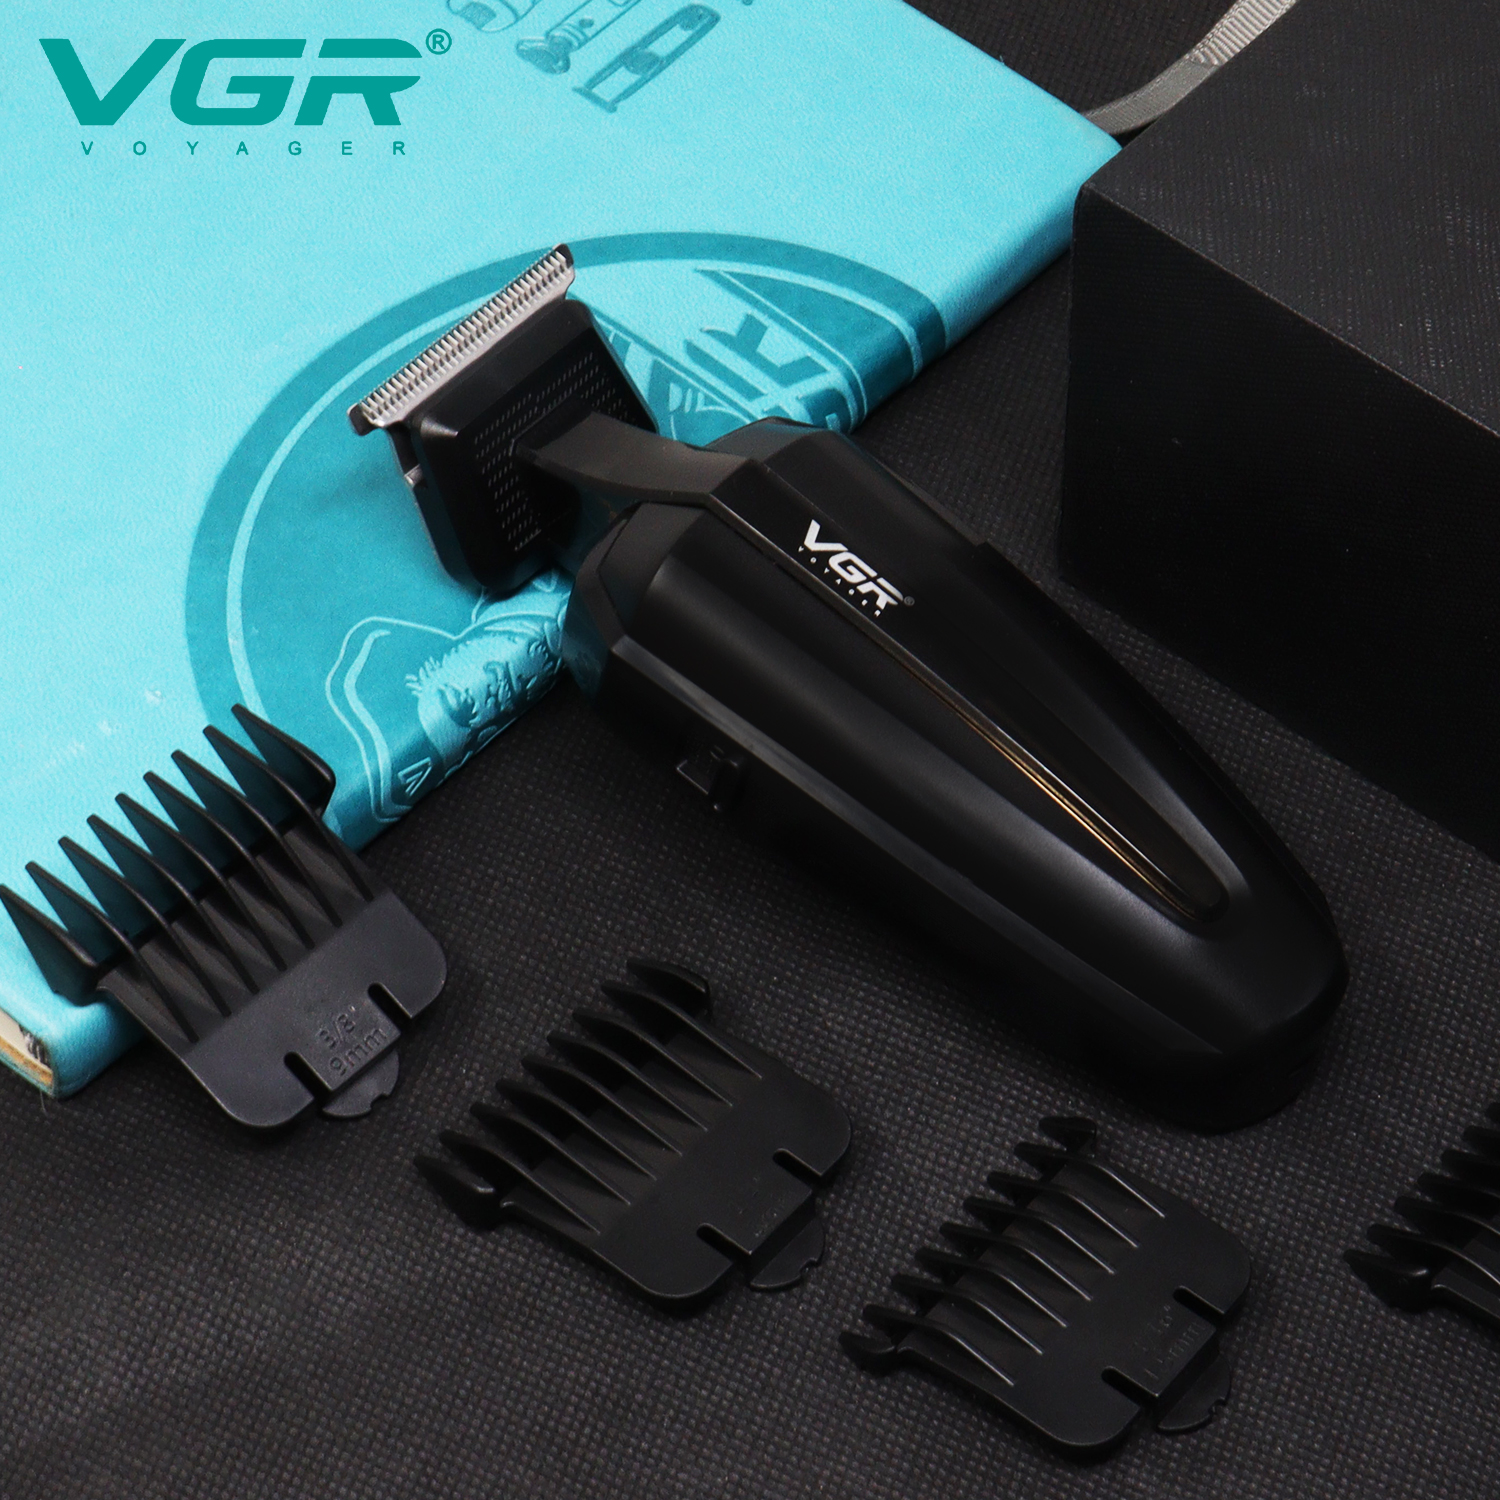 Buy Vgr Hair Trimmer At Best Price 16647736196